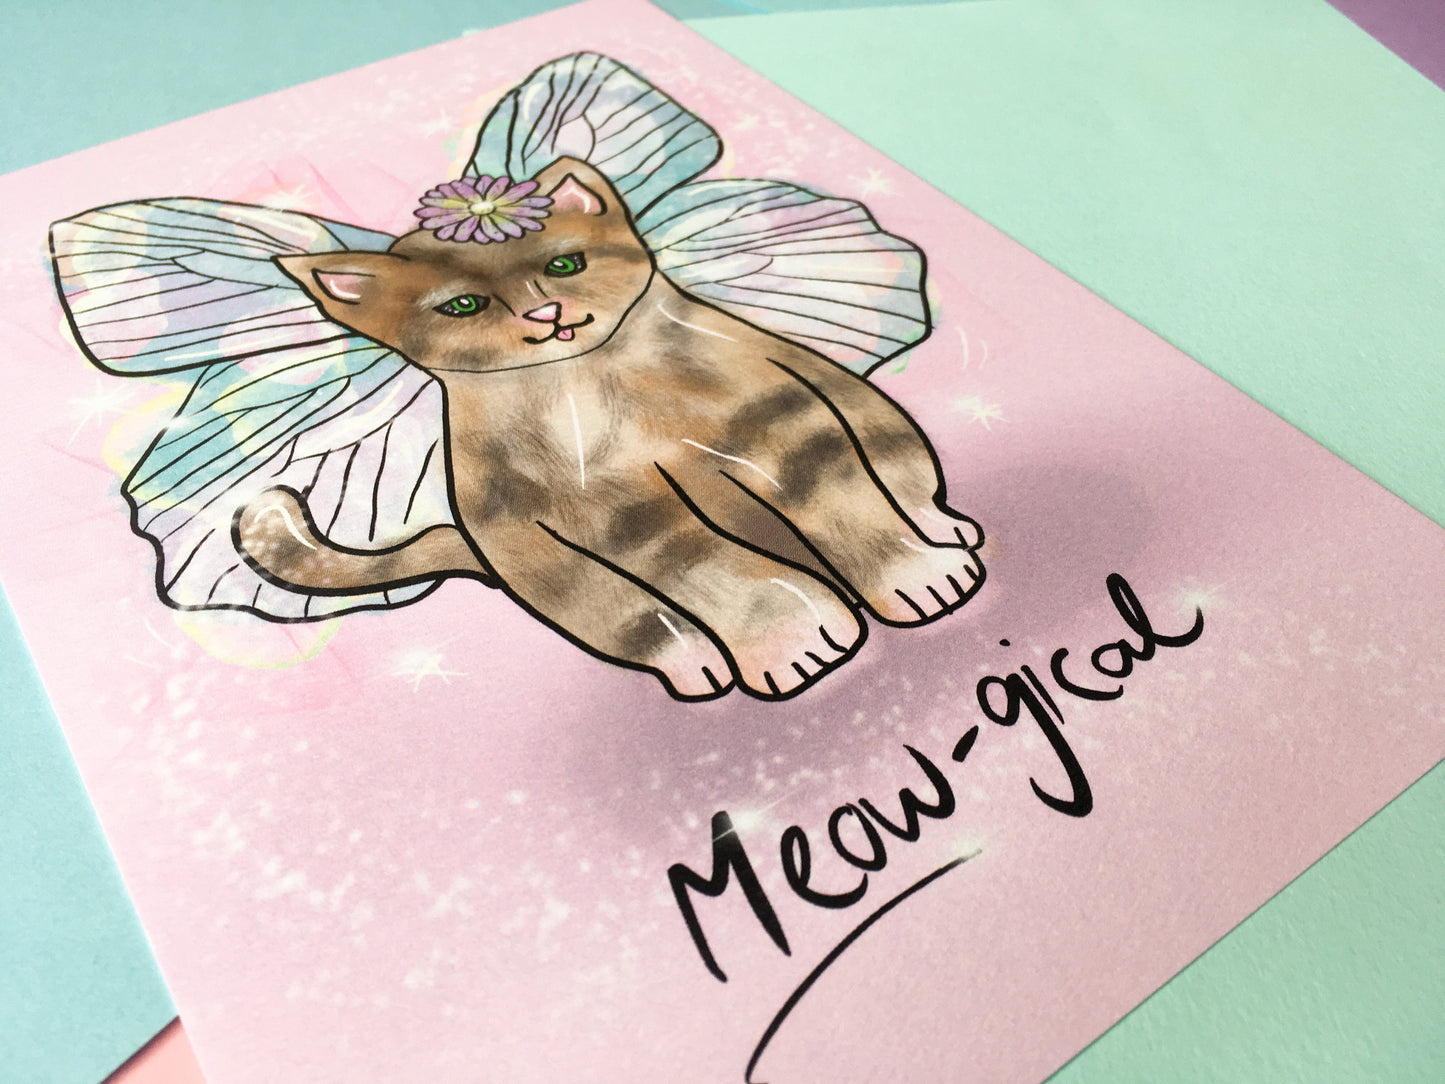 Magic Kitten A5 Print, Whimsical Cat Art